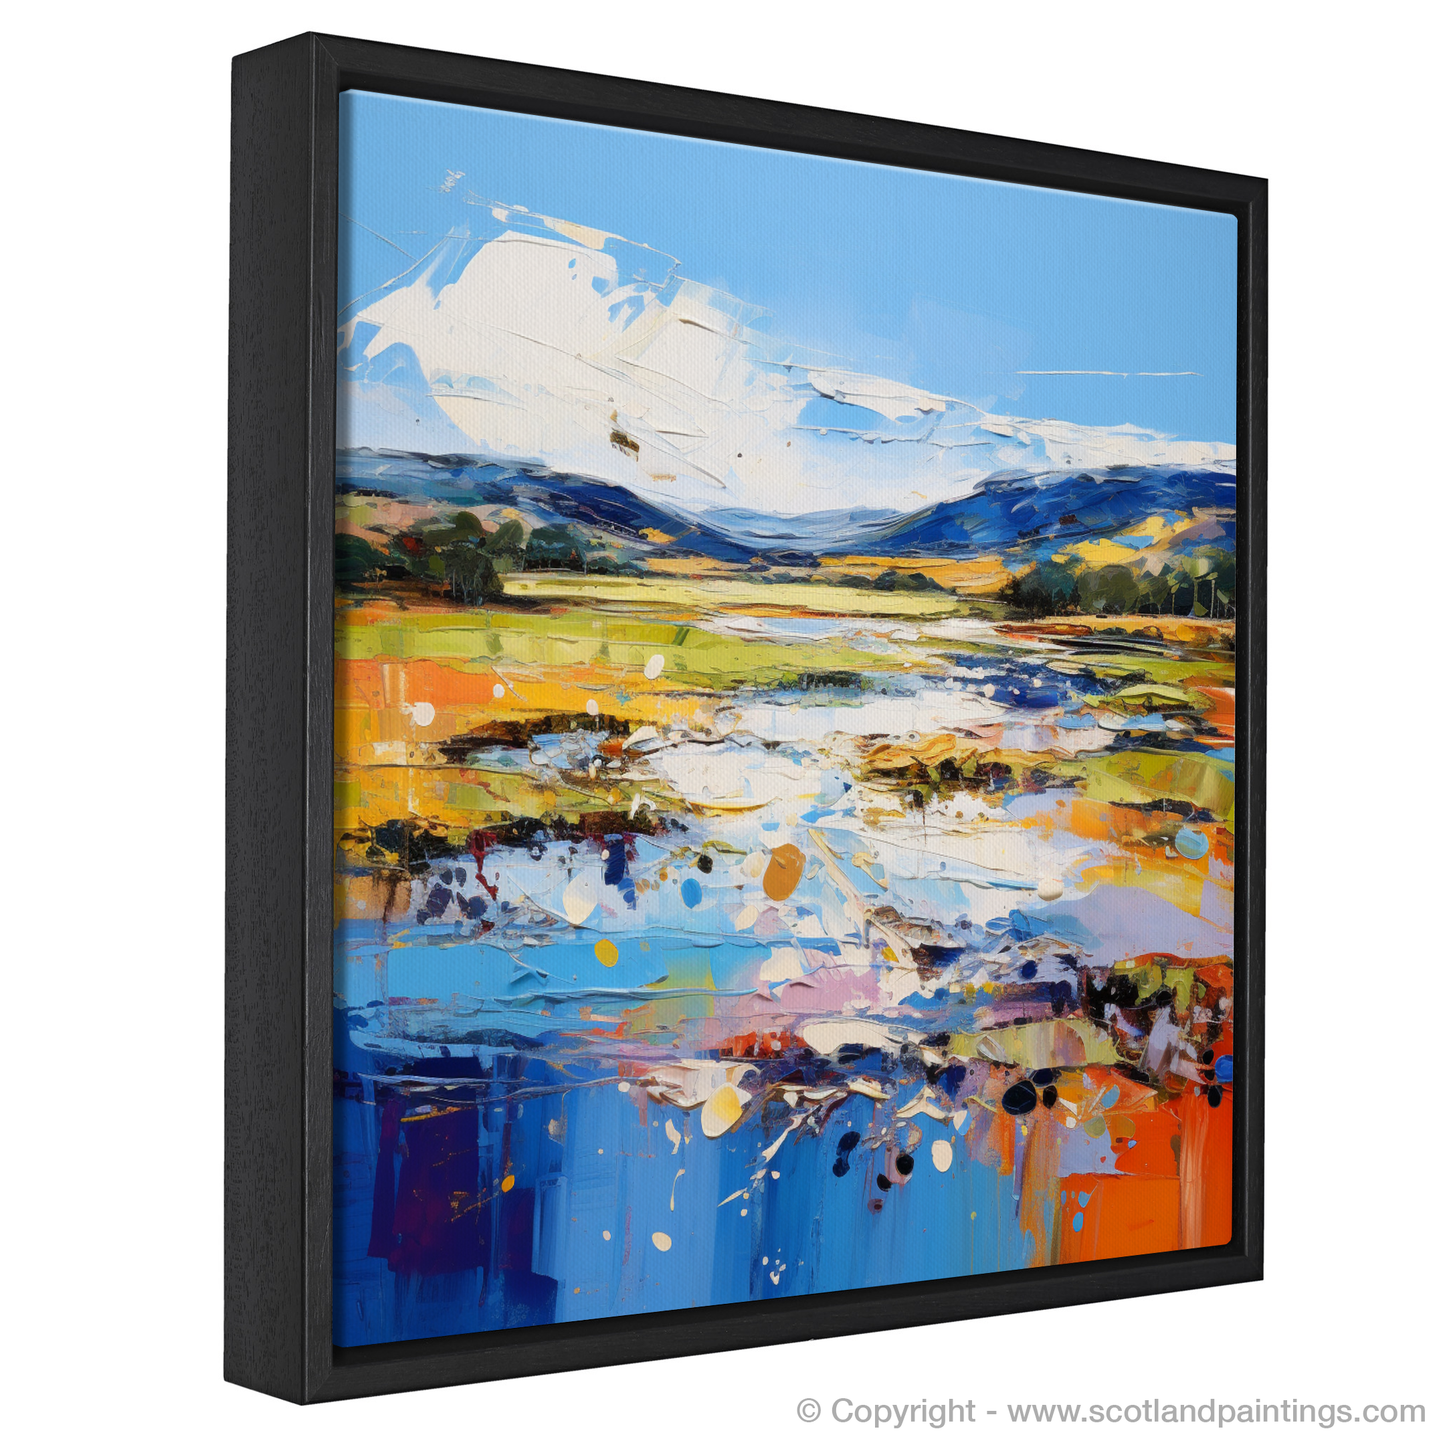 Painting and Art Print of Loch Doon, Ayrshire in summer entitled "Summer Blaze at Loch Doon".